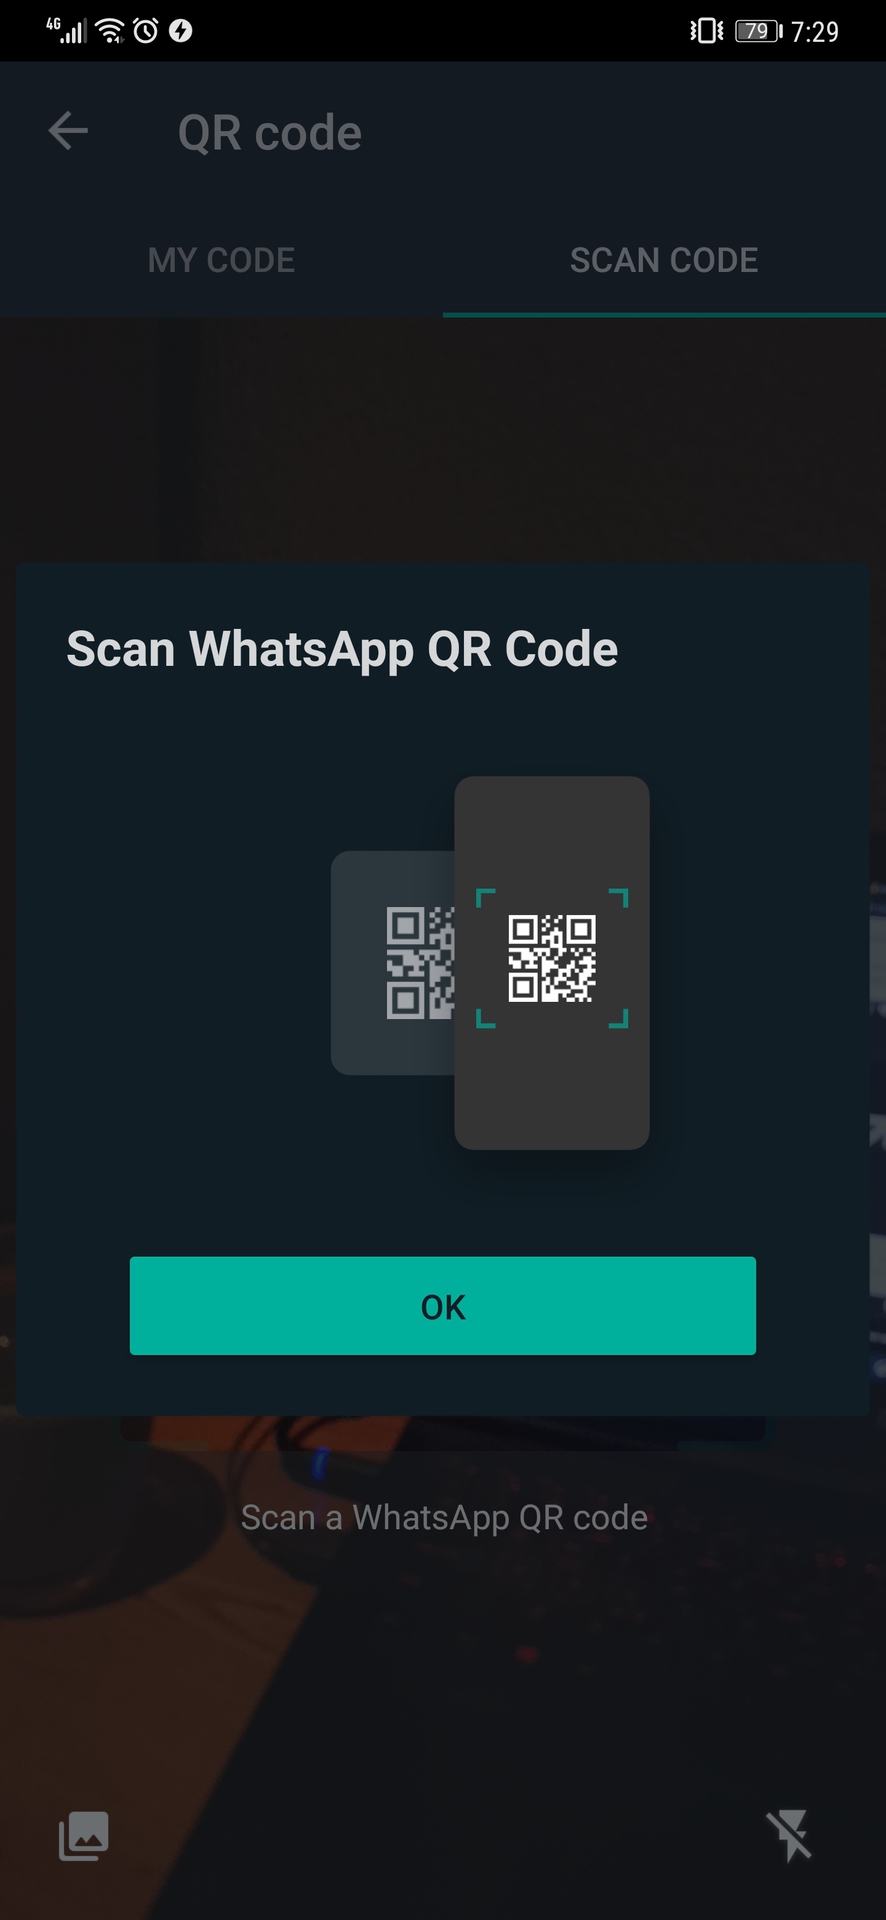 The WhatsApp QR code functionality.